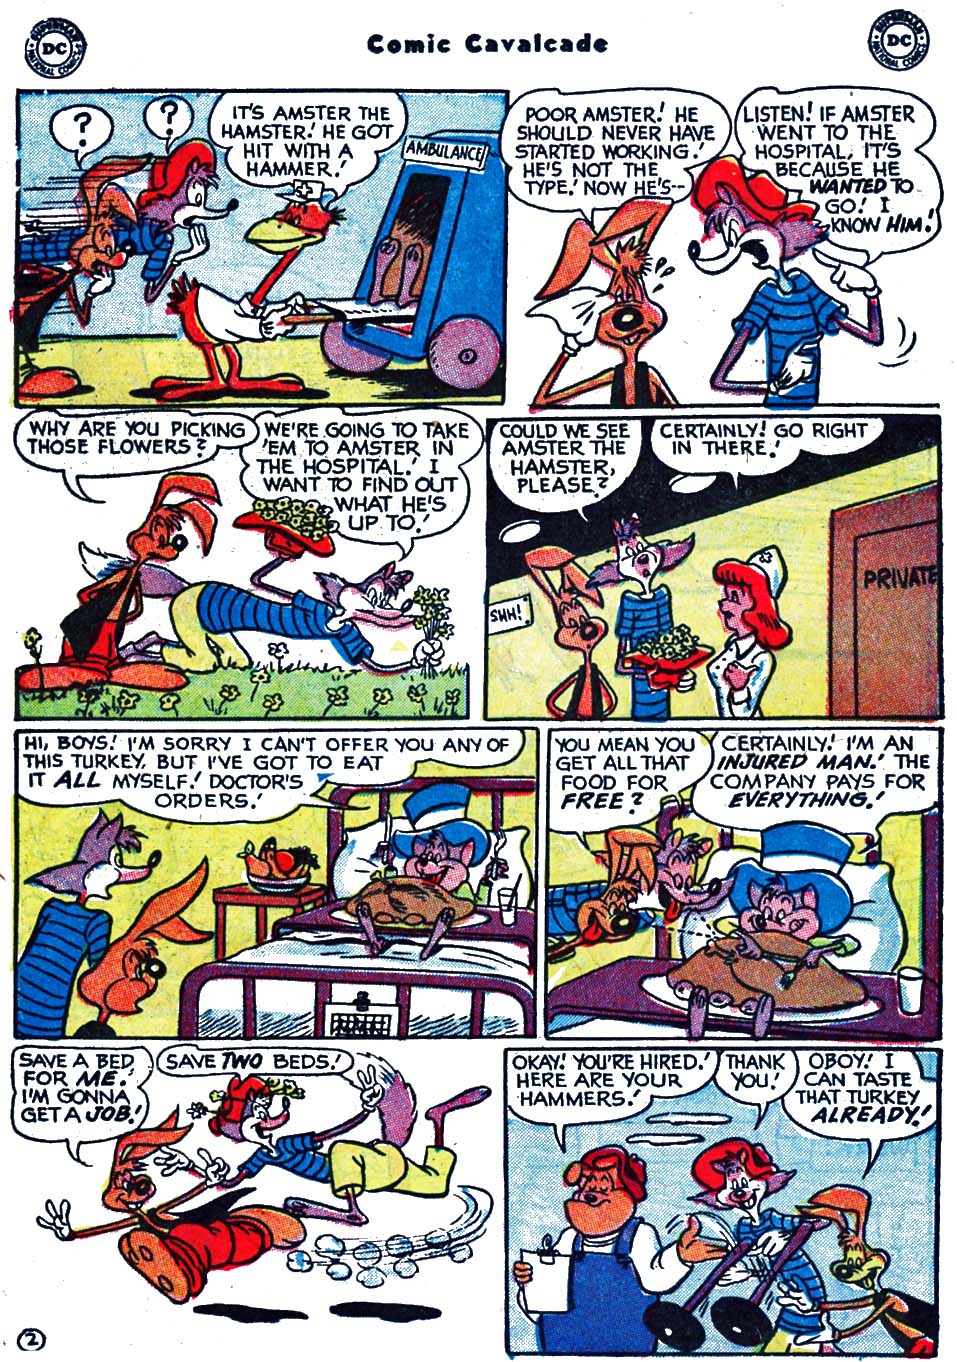 Comic Cavalcade issue 51 - Page 24